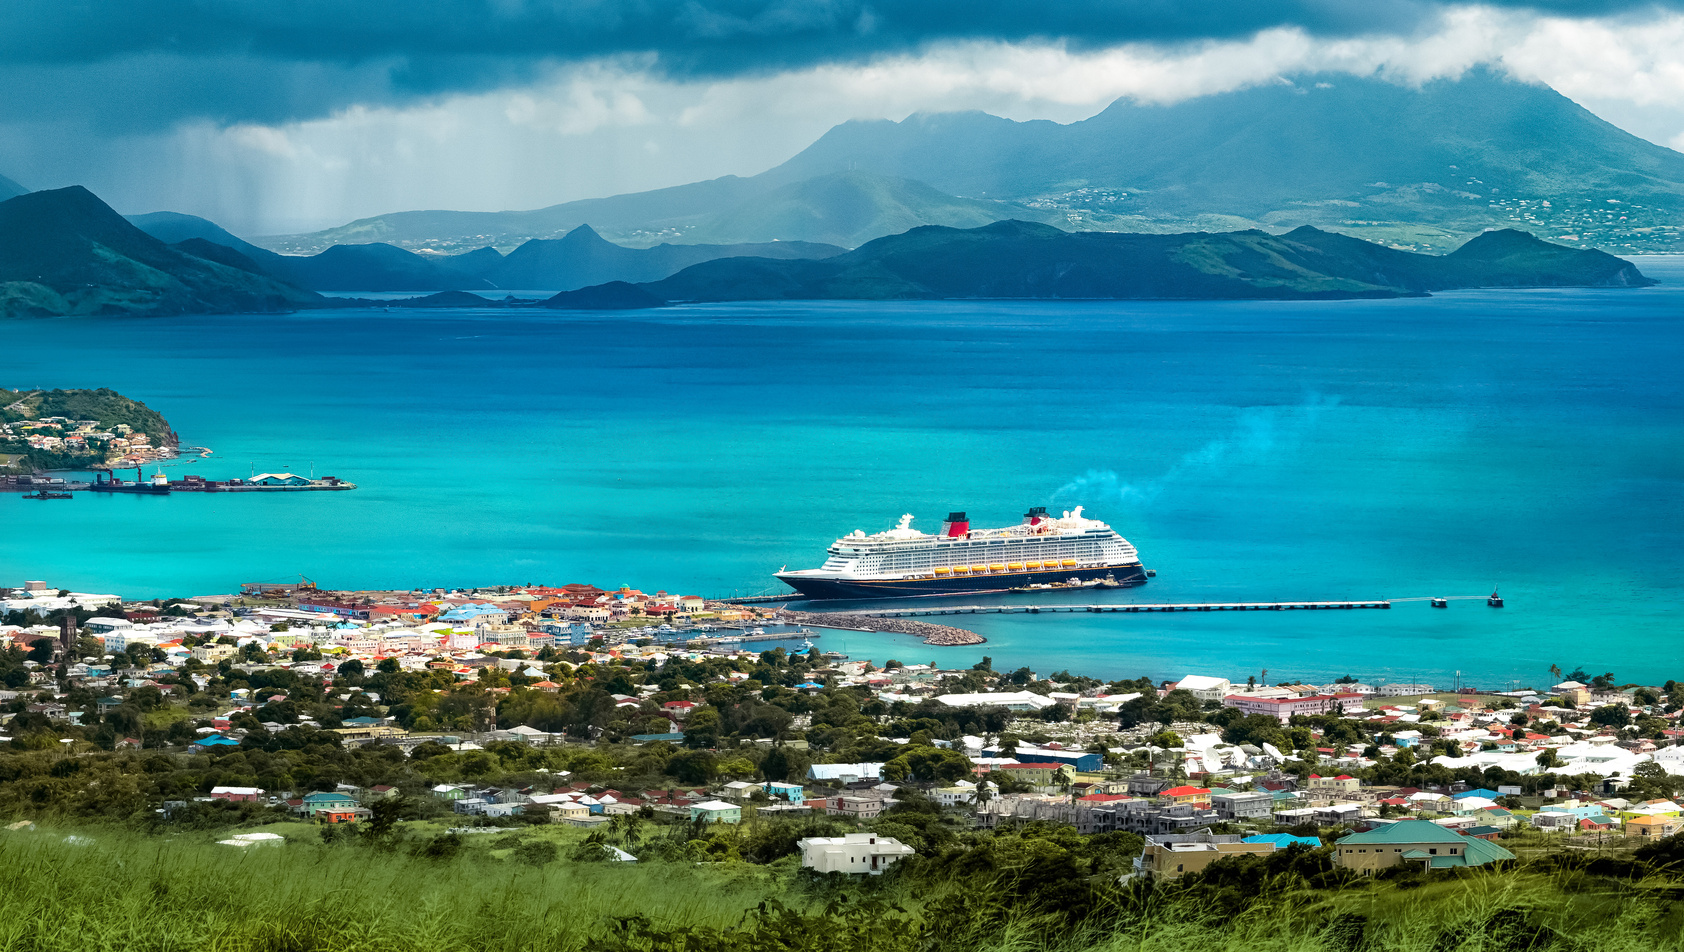 Caribbean Sea with cruise ship